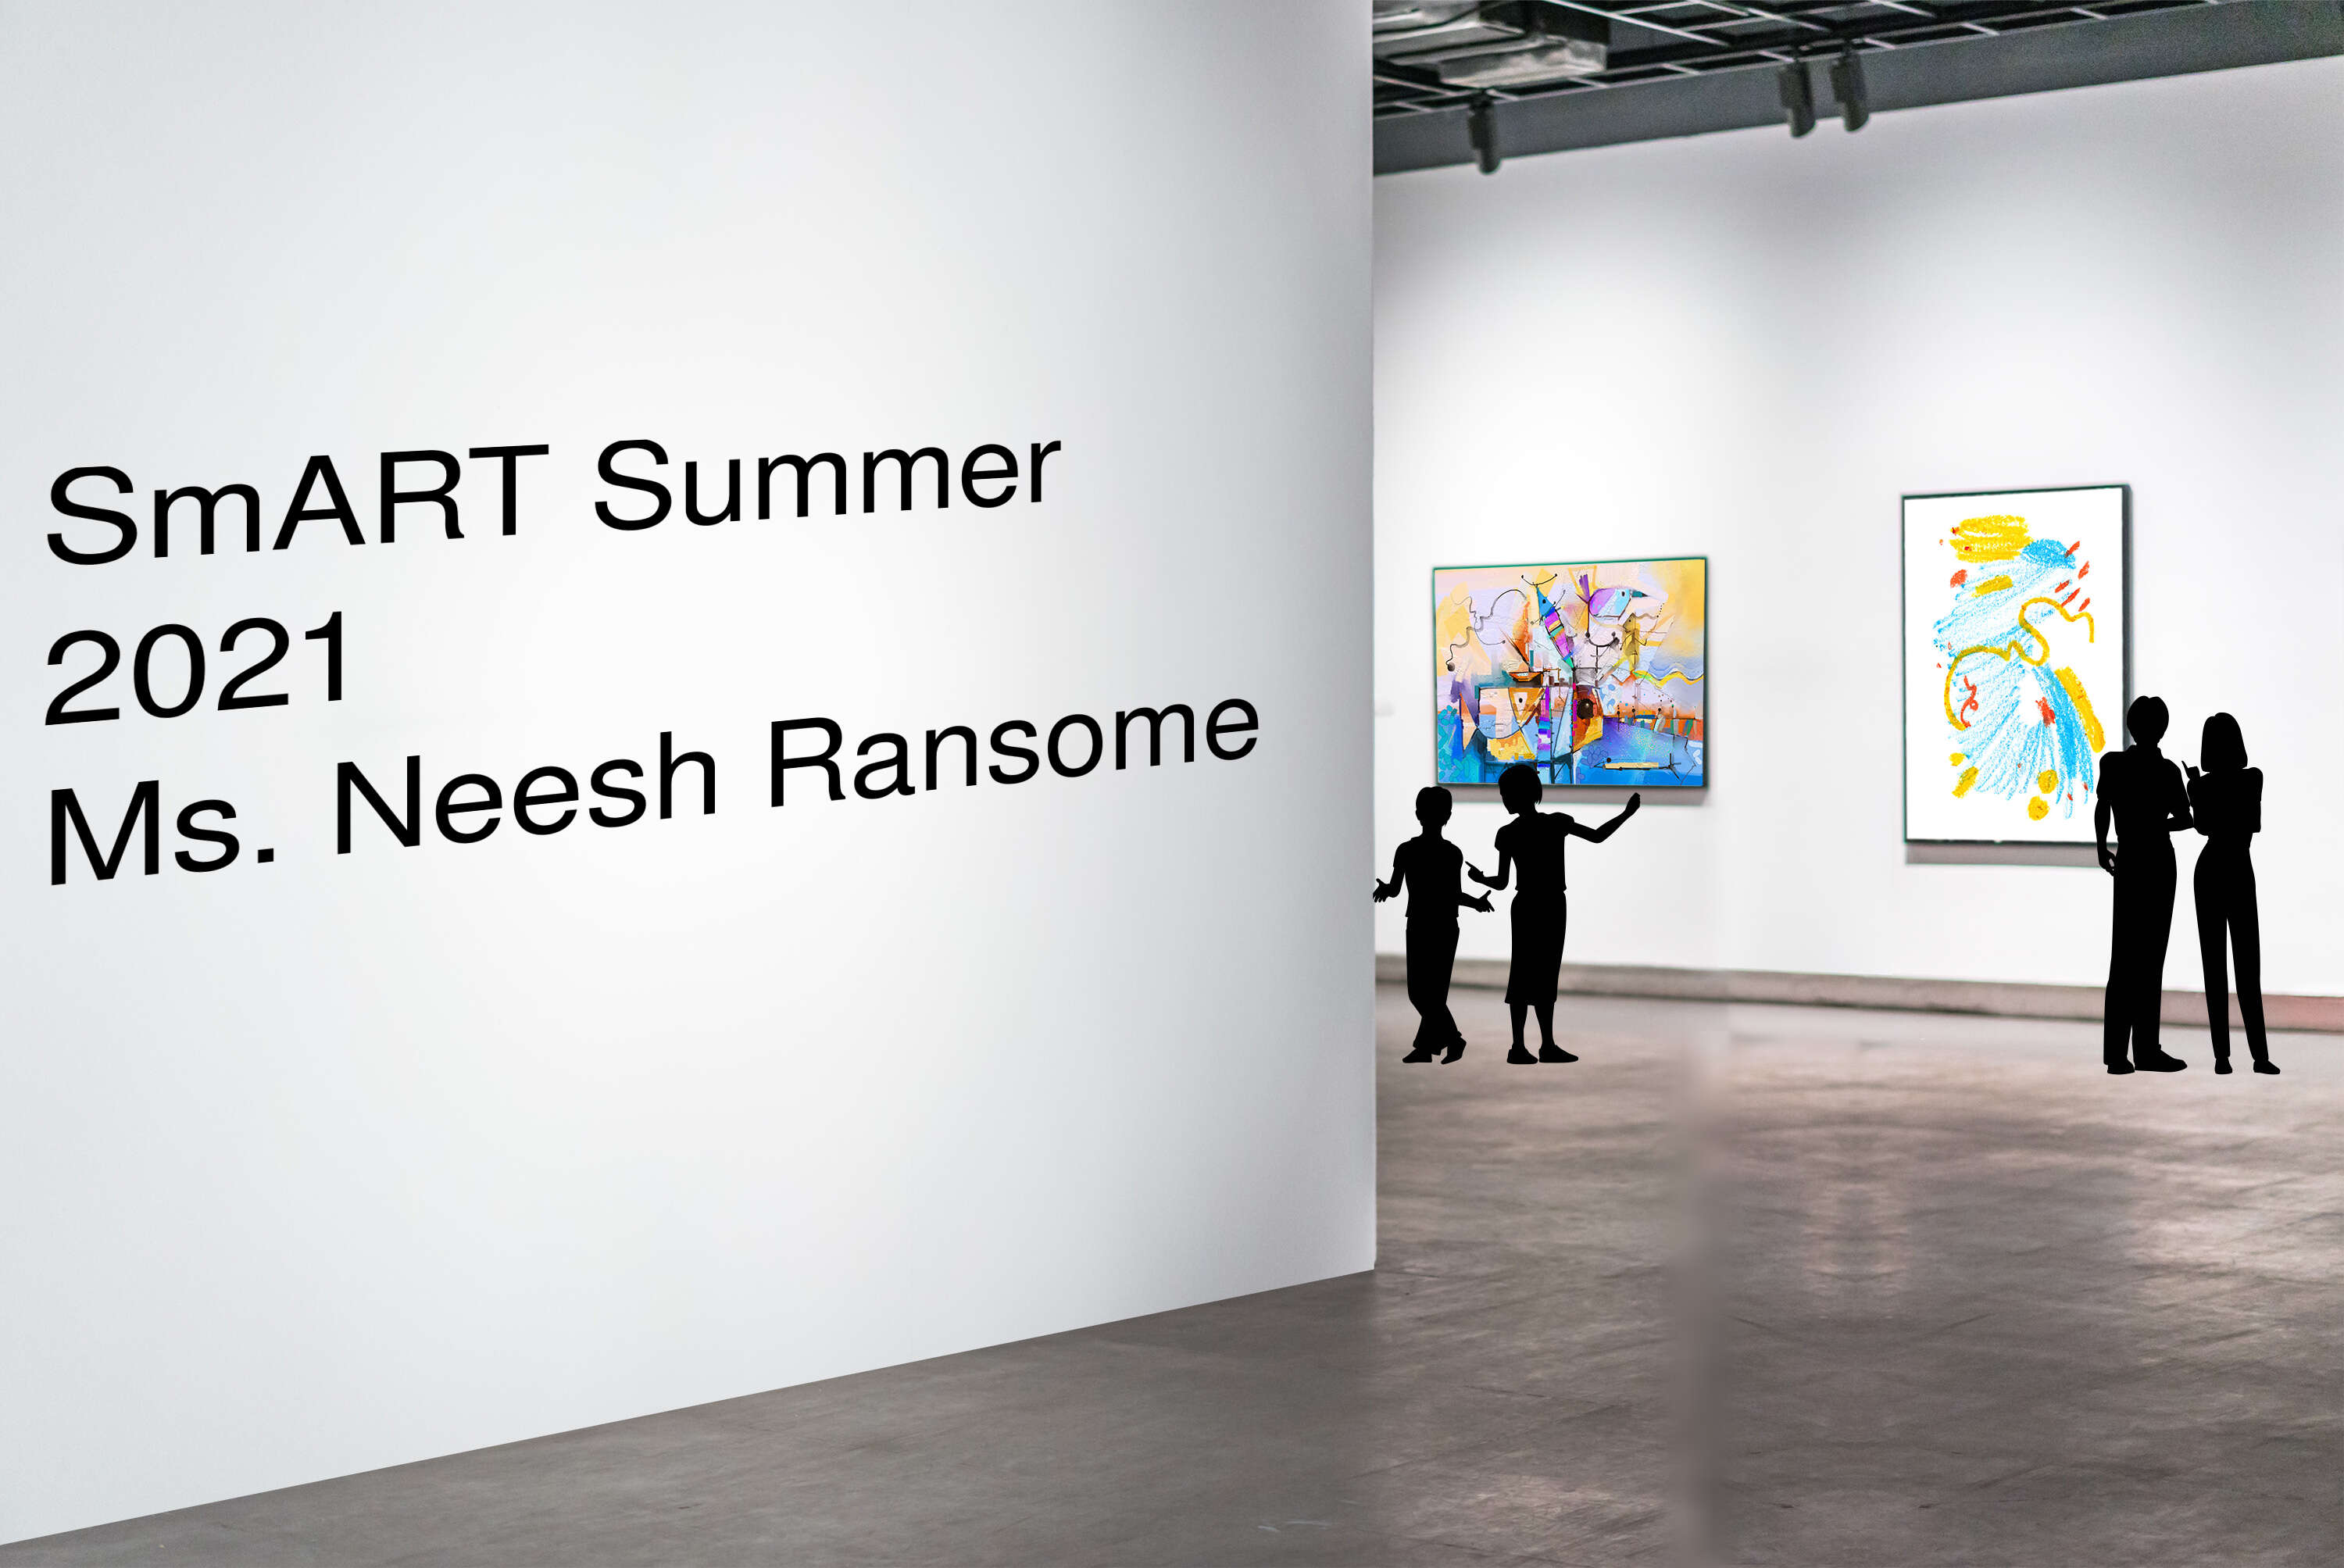 SmART Summer 2021
Ms. Neesh Ransome